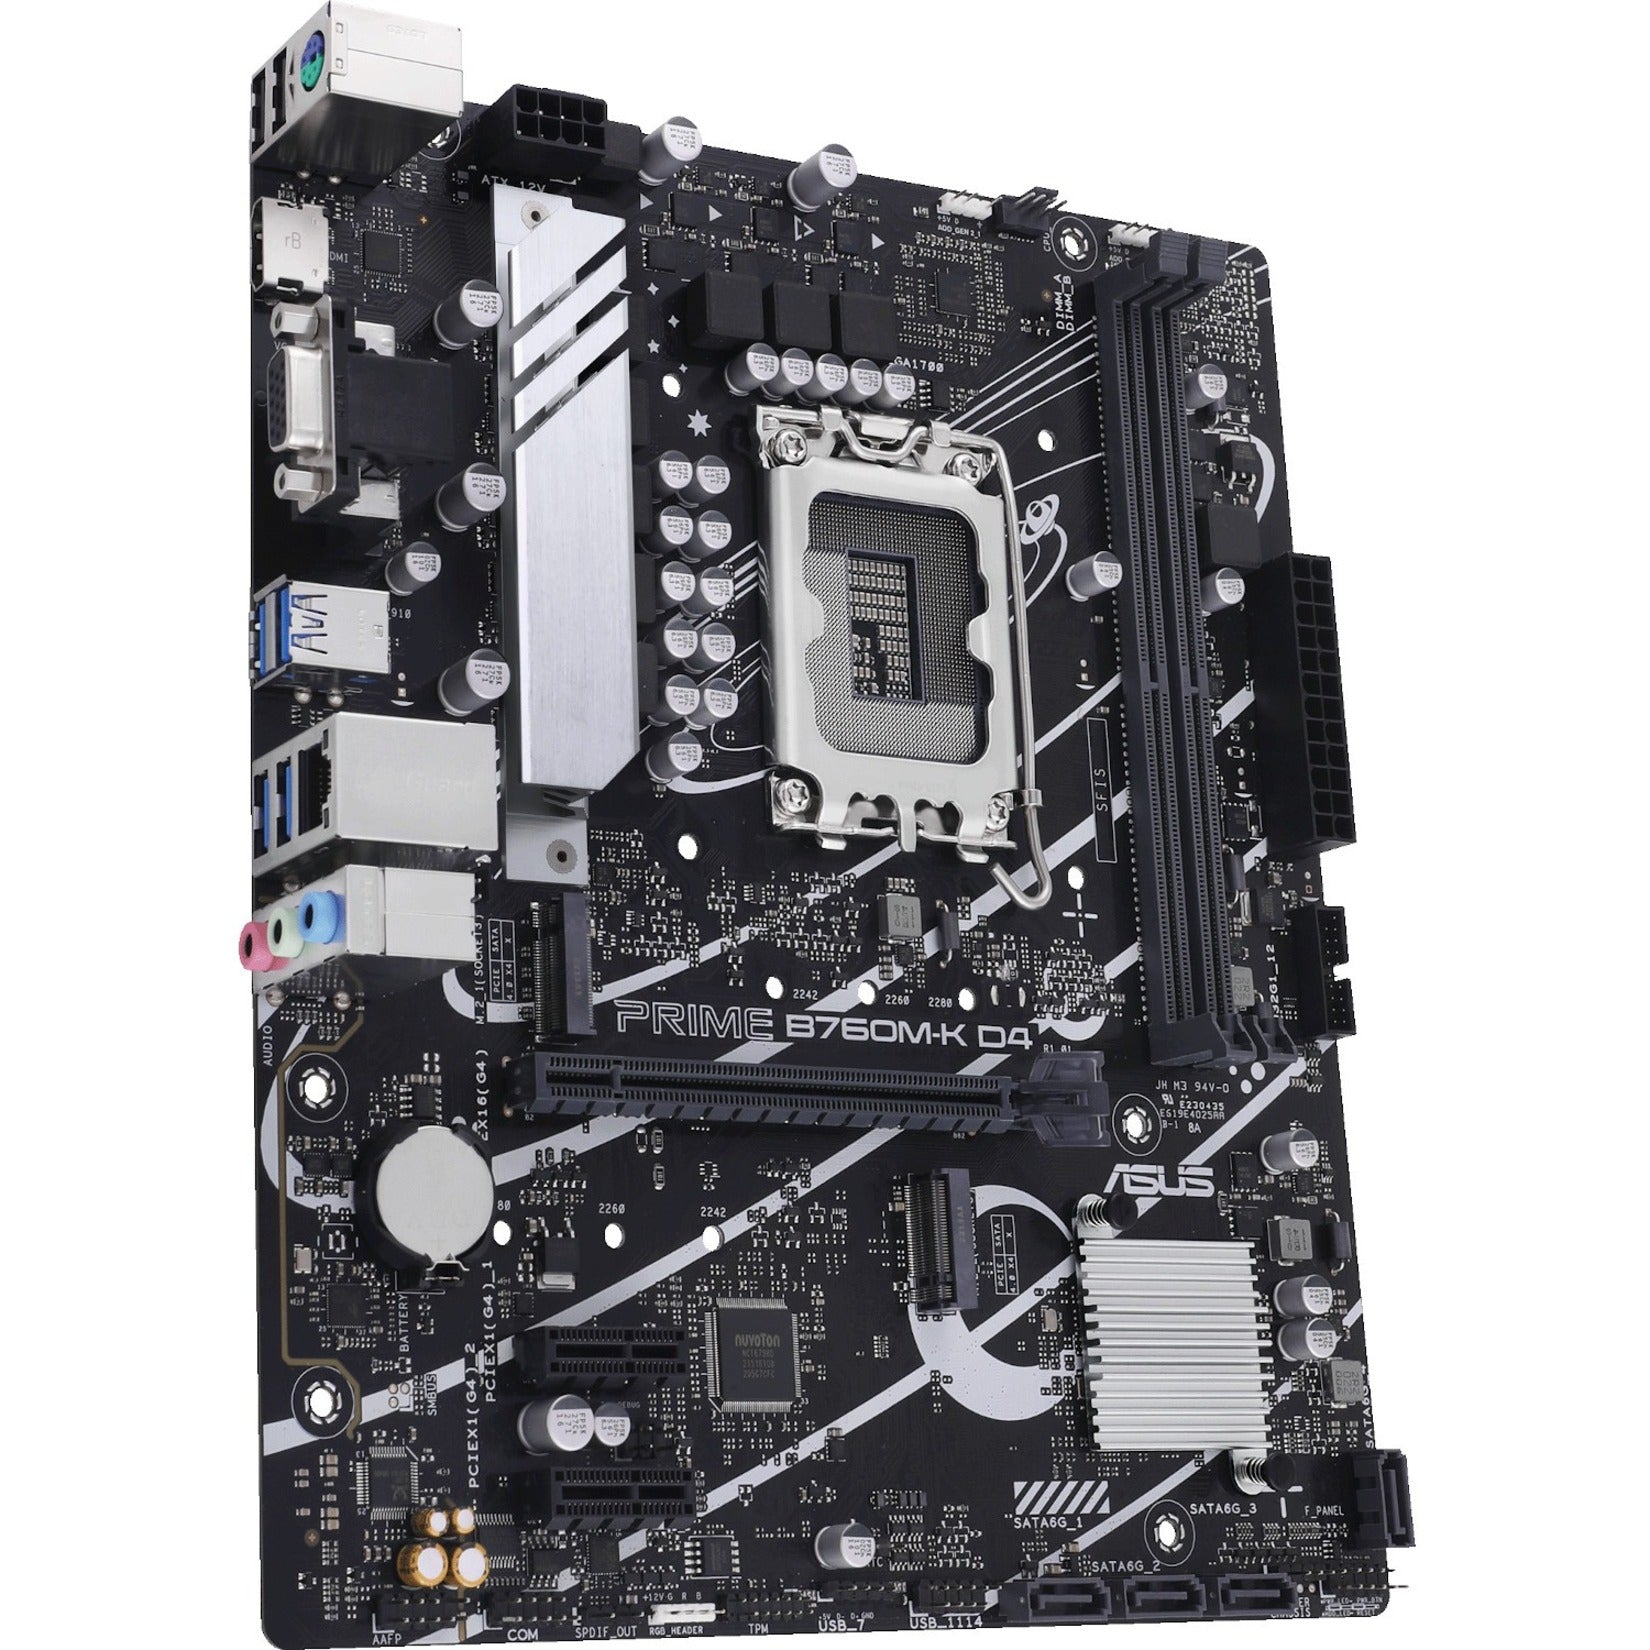 Asus PRIMEB760M-KD4 Prime B760M-K D4 Desktop Motherboard - Intel B760 Chipset, Socket LGA-1700, Intel Optane Memory Ready, Micro ATX